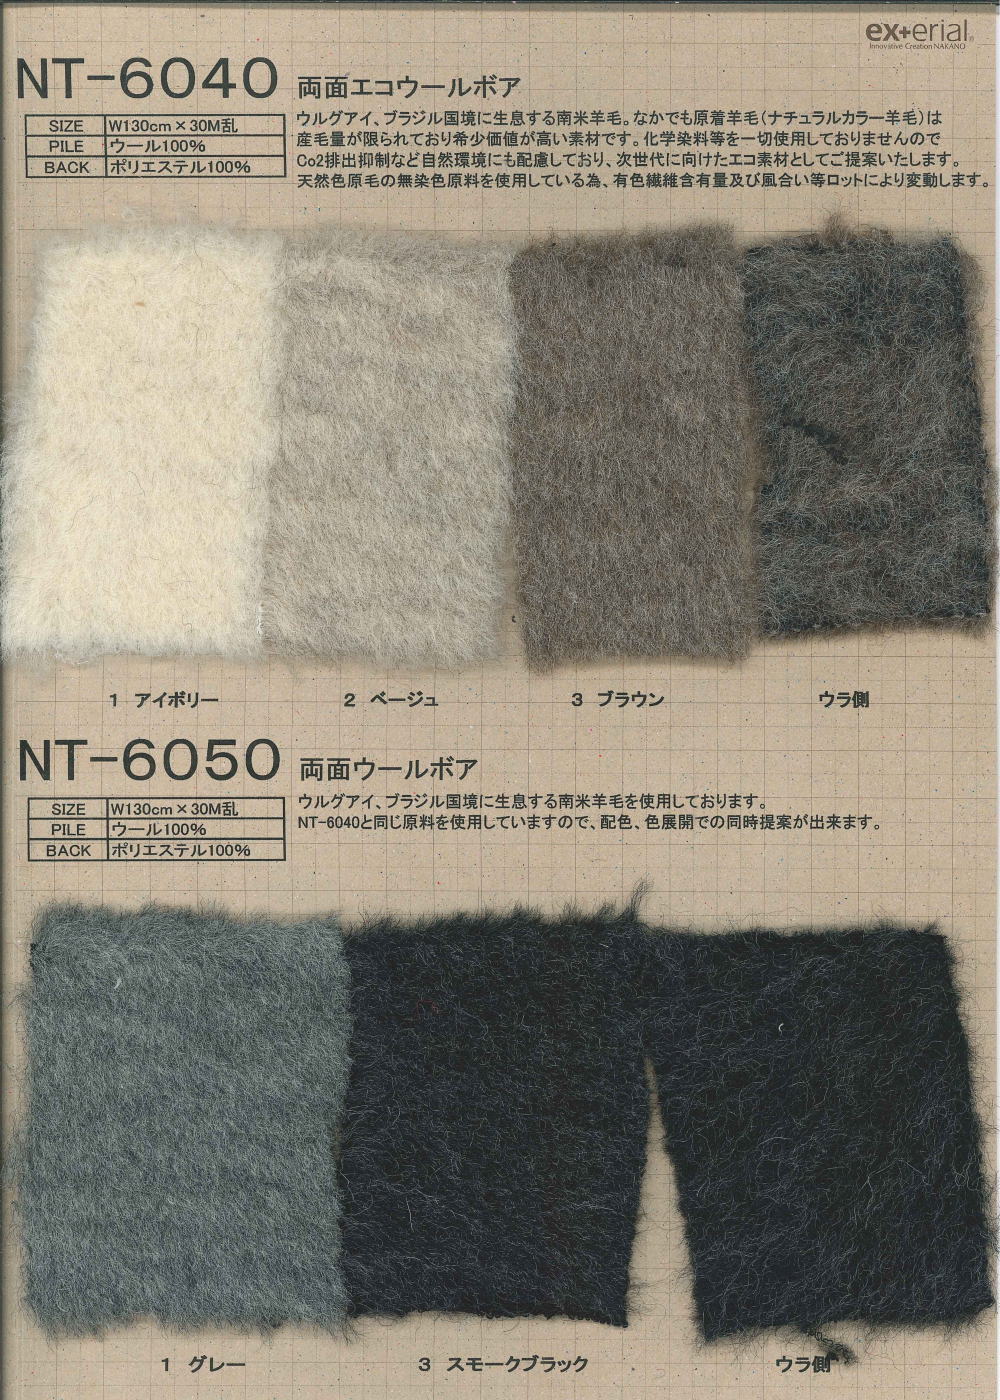 NT-6040 NT-6050